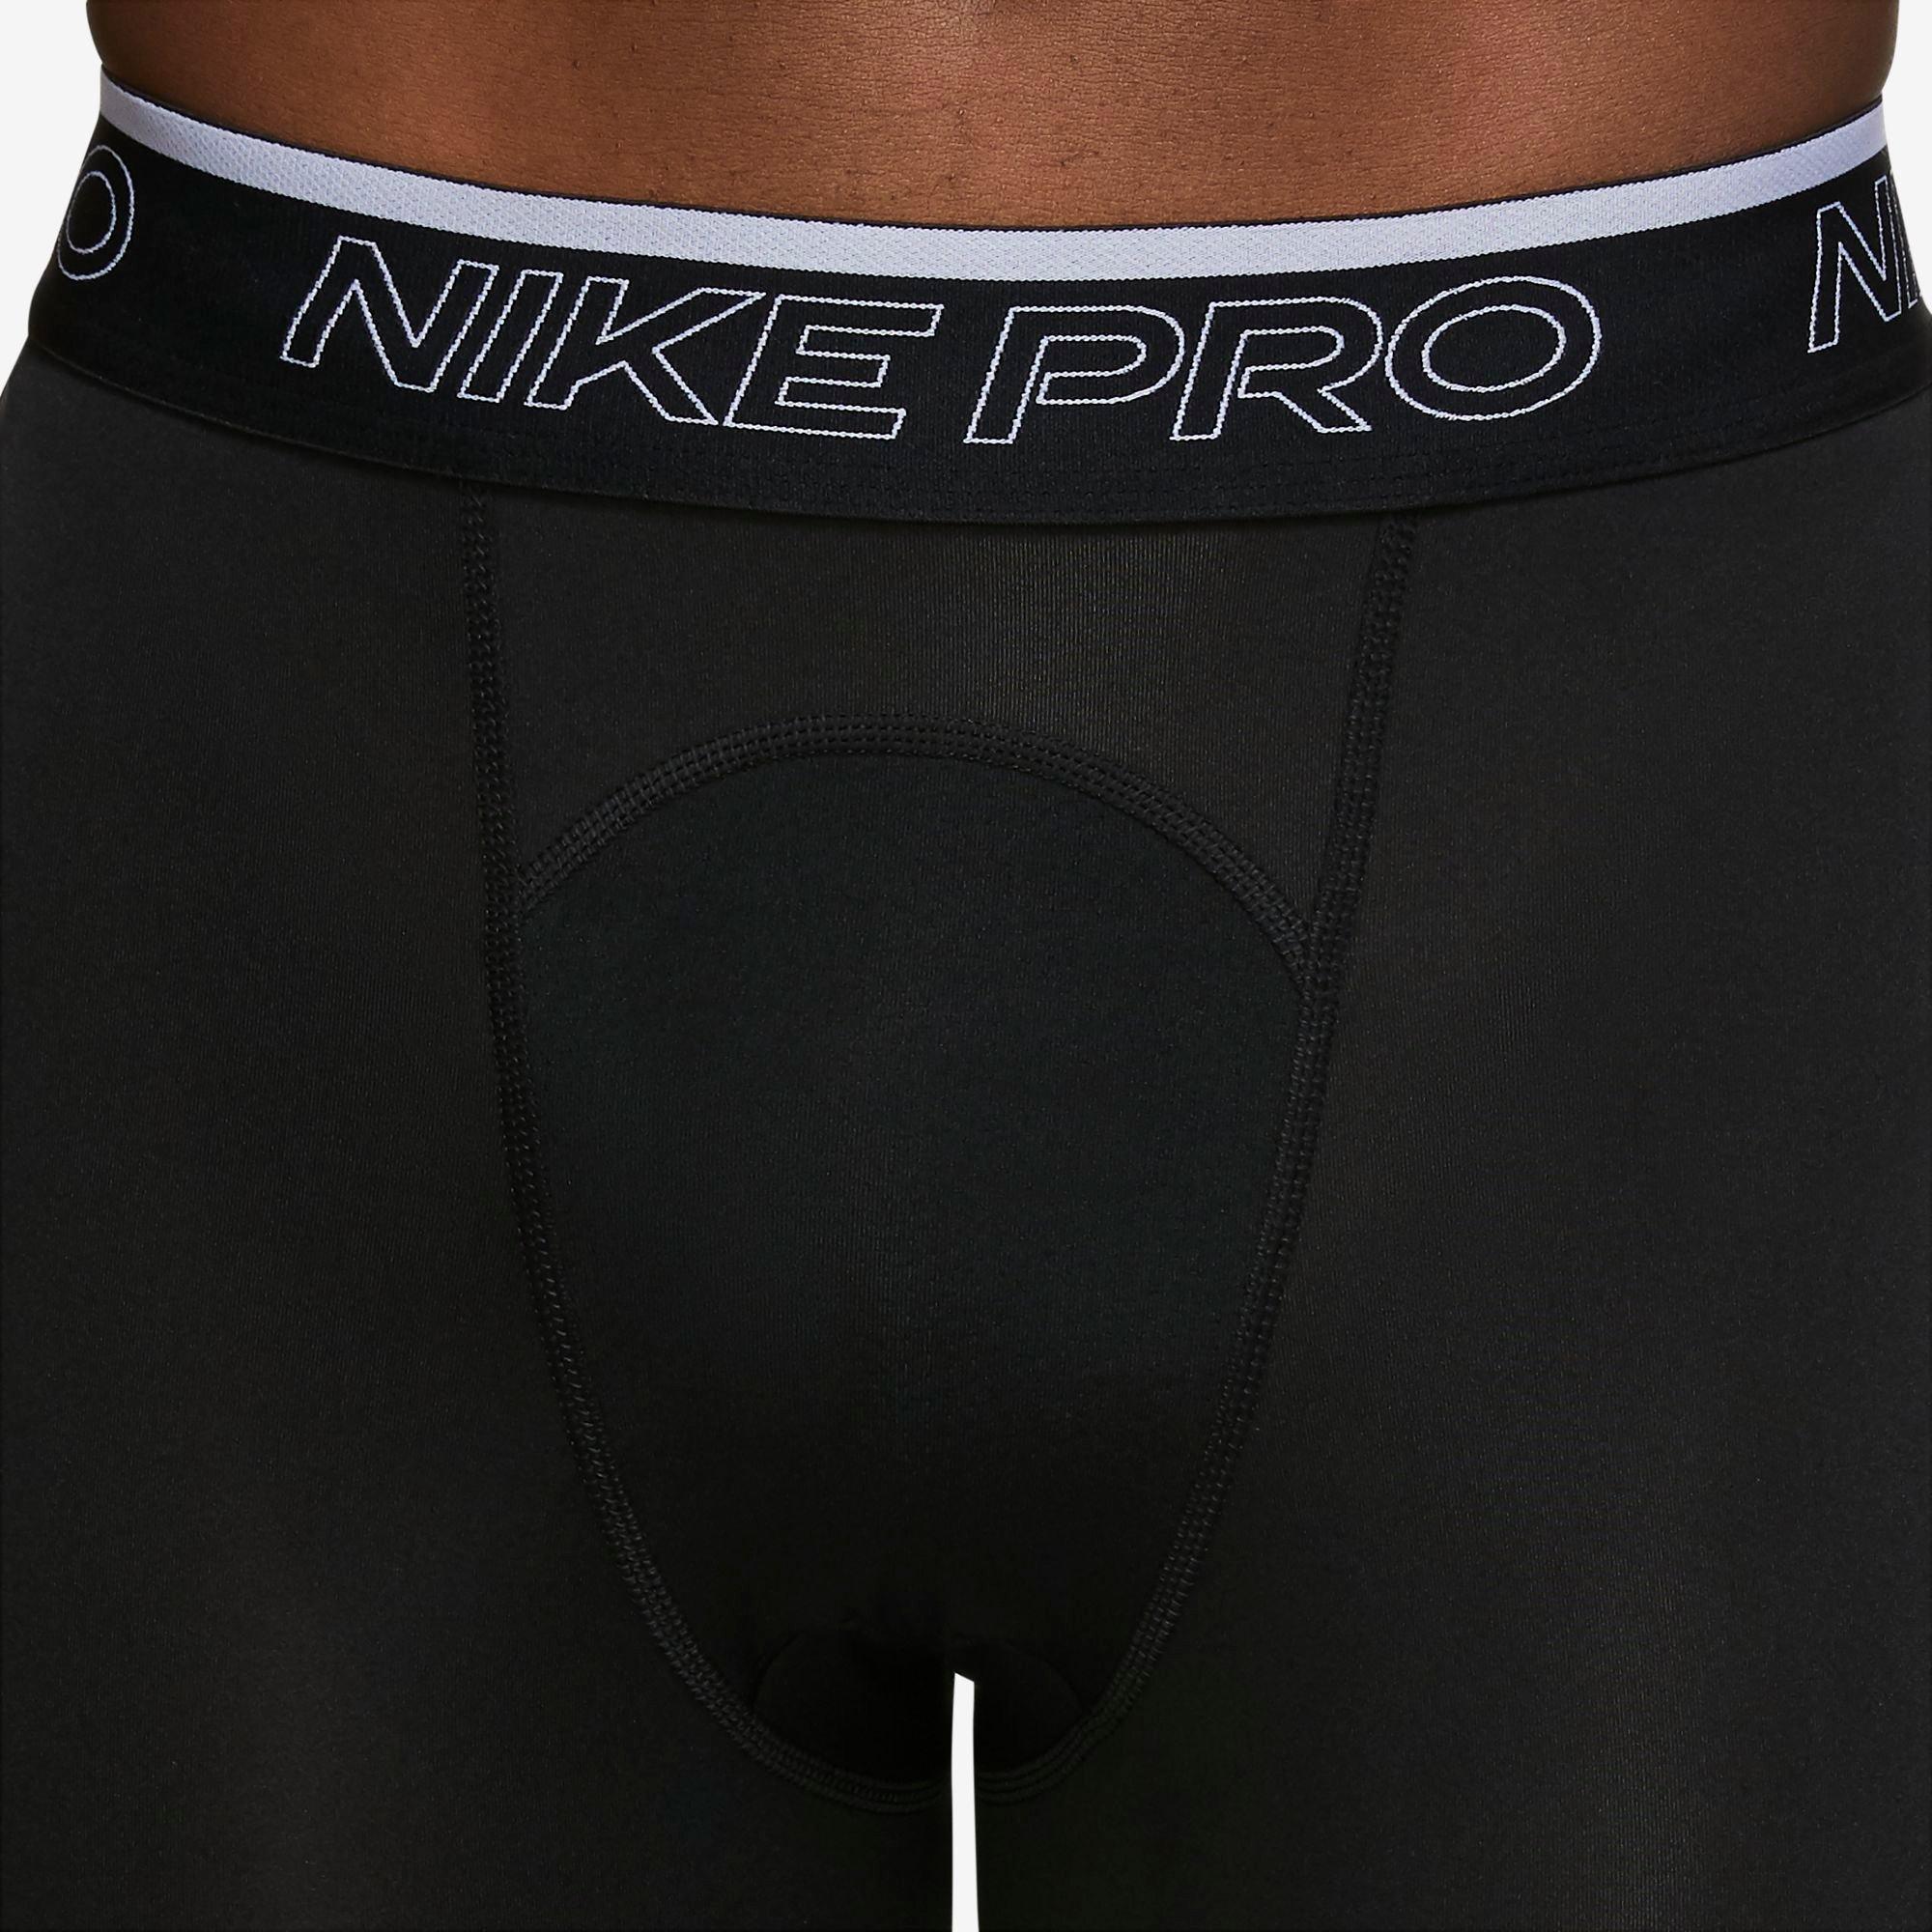 Nike Pro Dri-Fit Men's 3/4 Tights (Black)